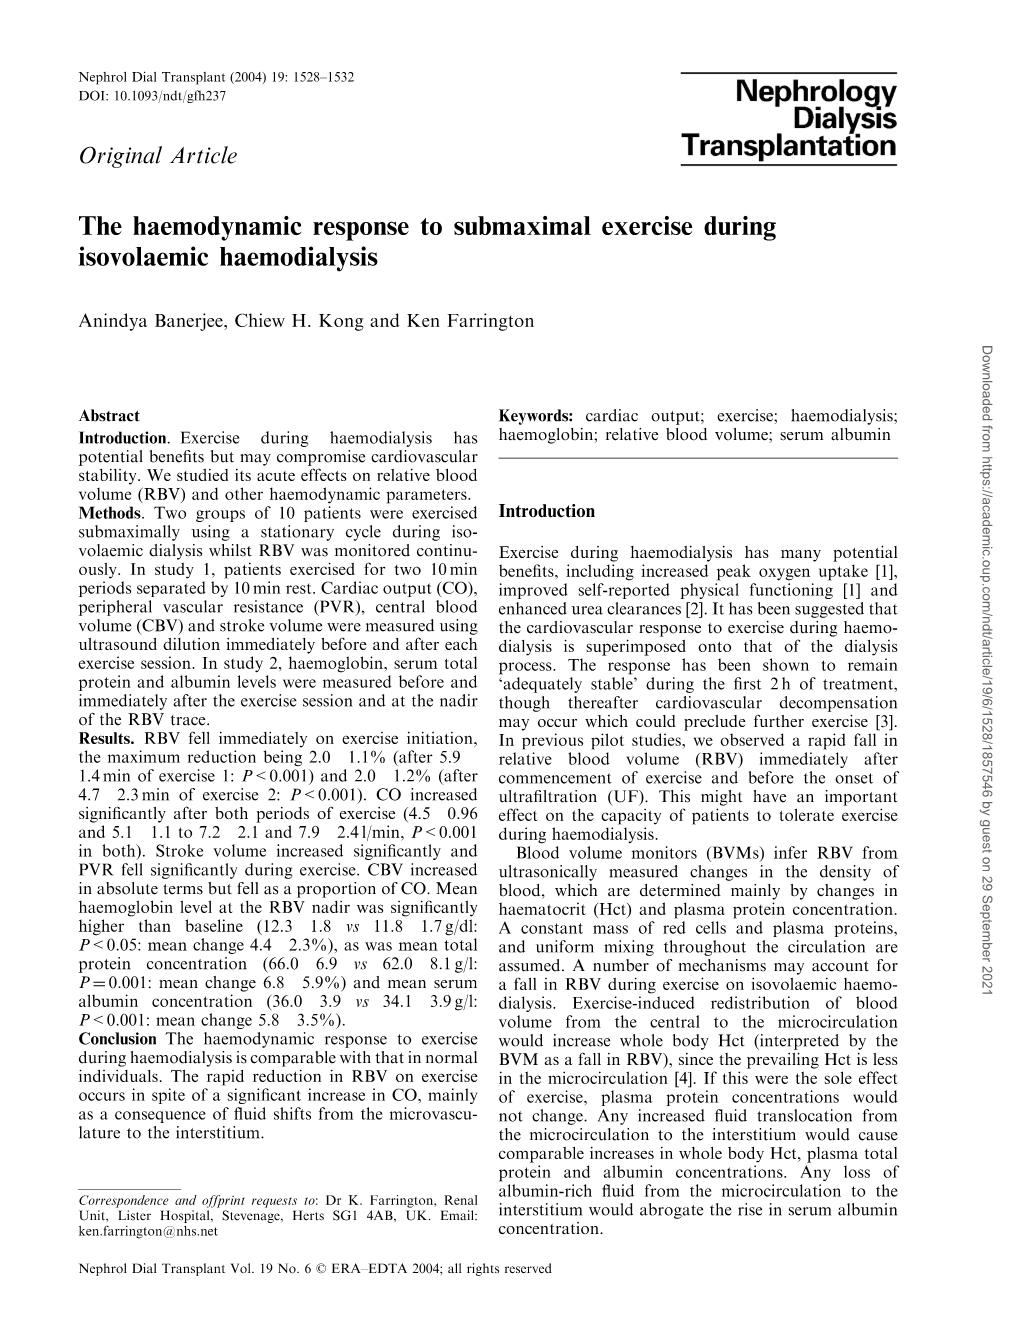 The Haemodynamic Response to Submaximal Exercise During Isovolaemic Haemodialysis